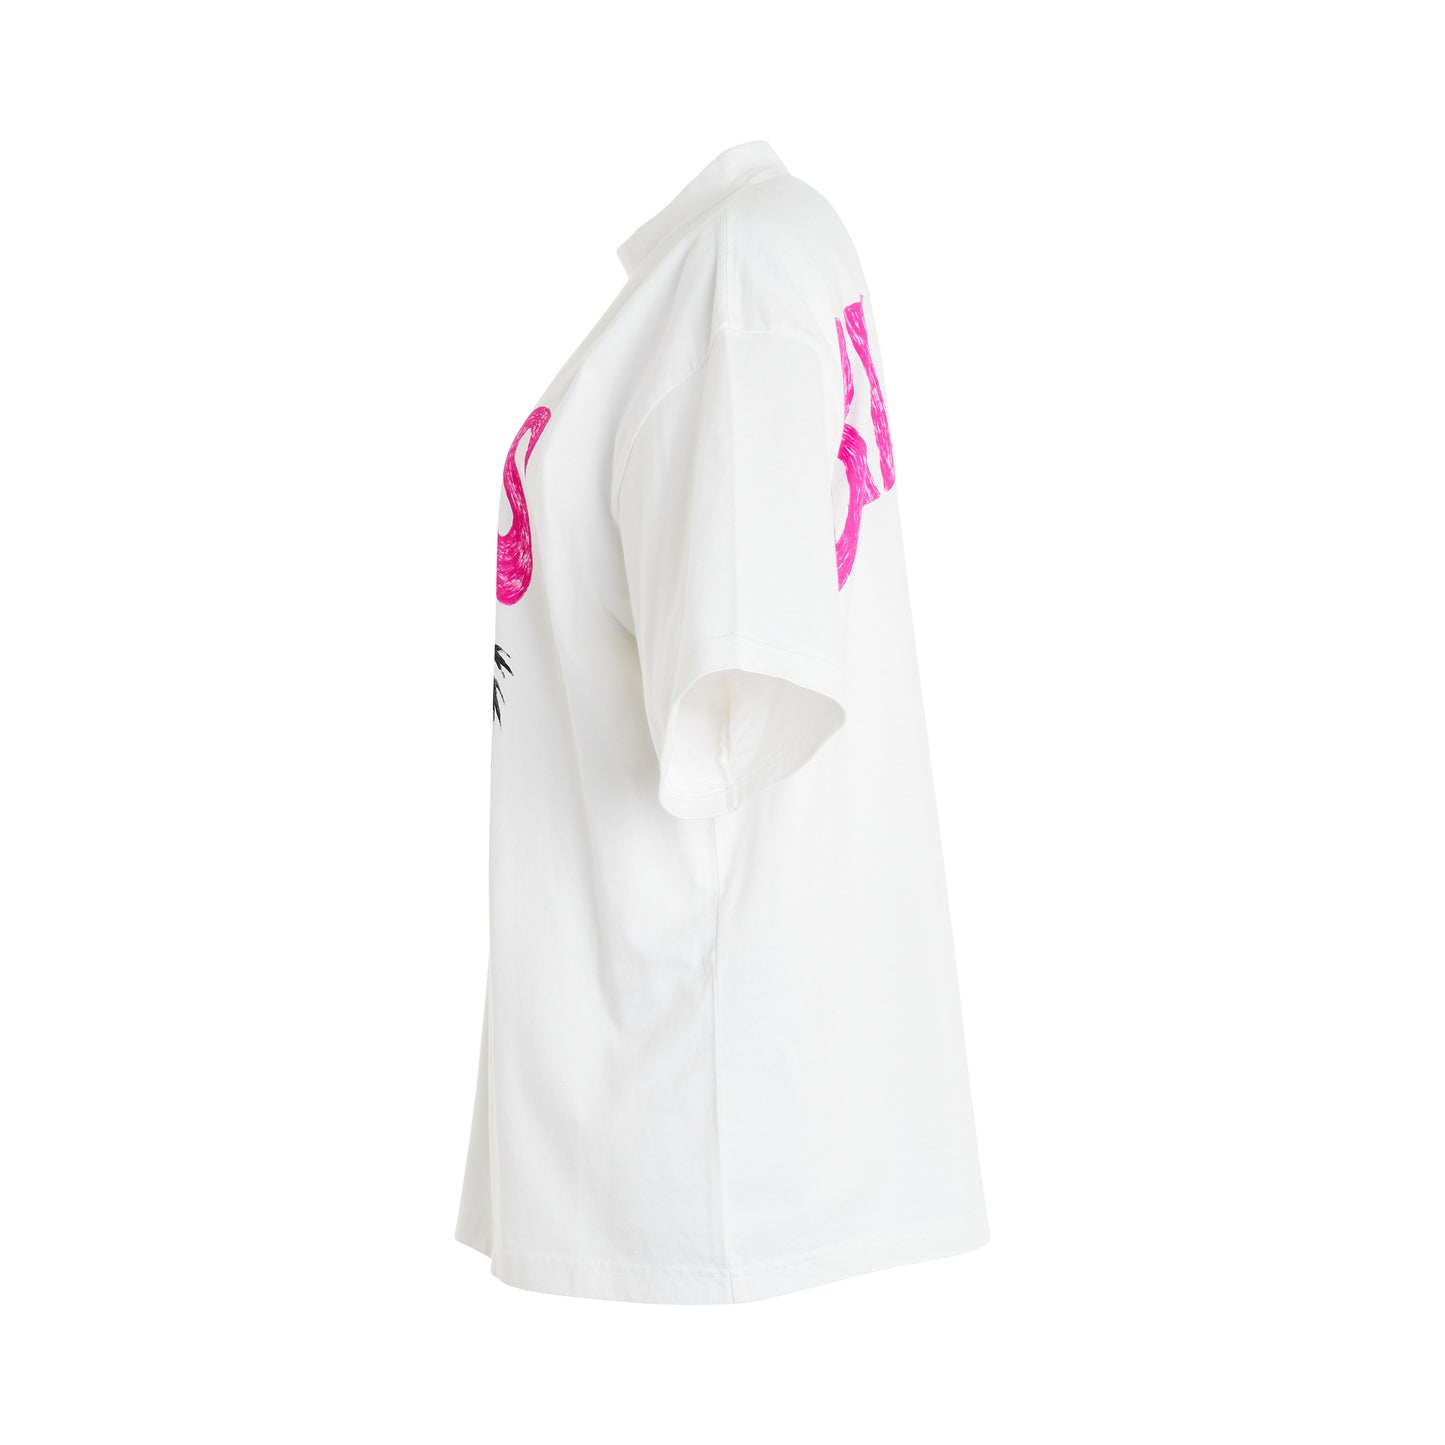 Tropical Paris Logo T-Shirt in White/Pink